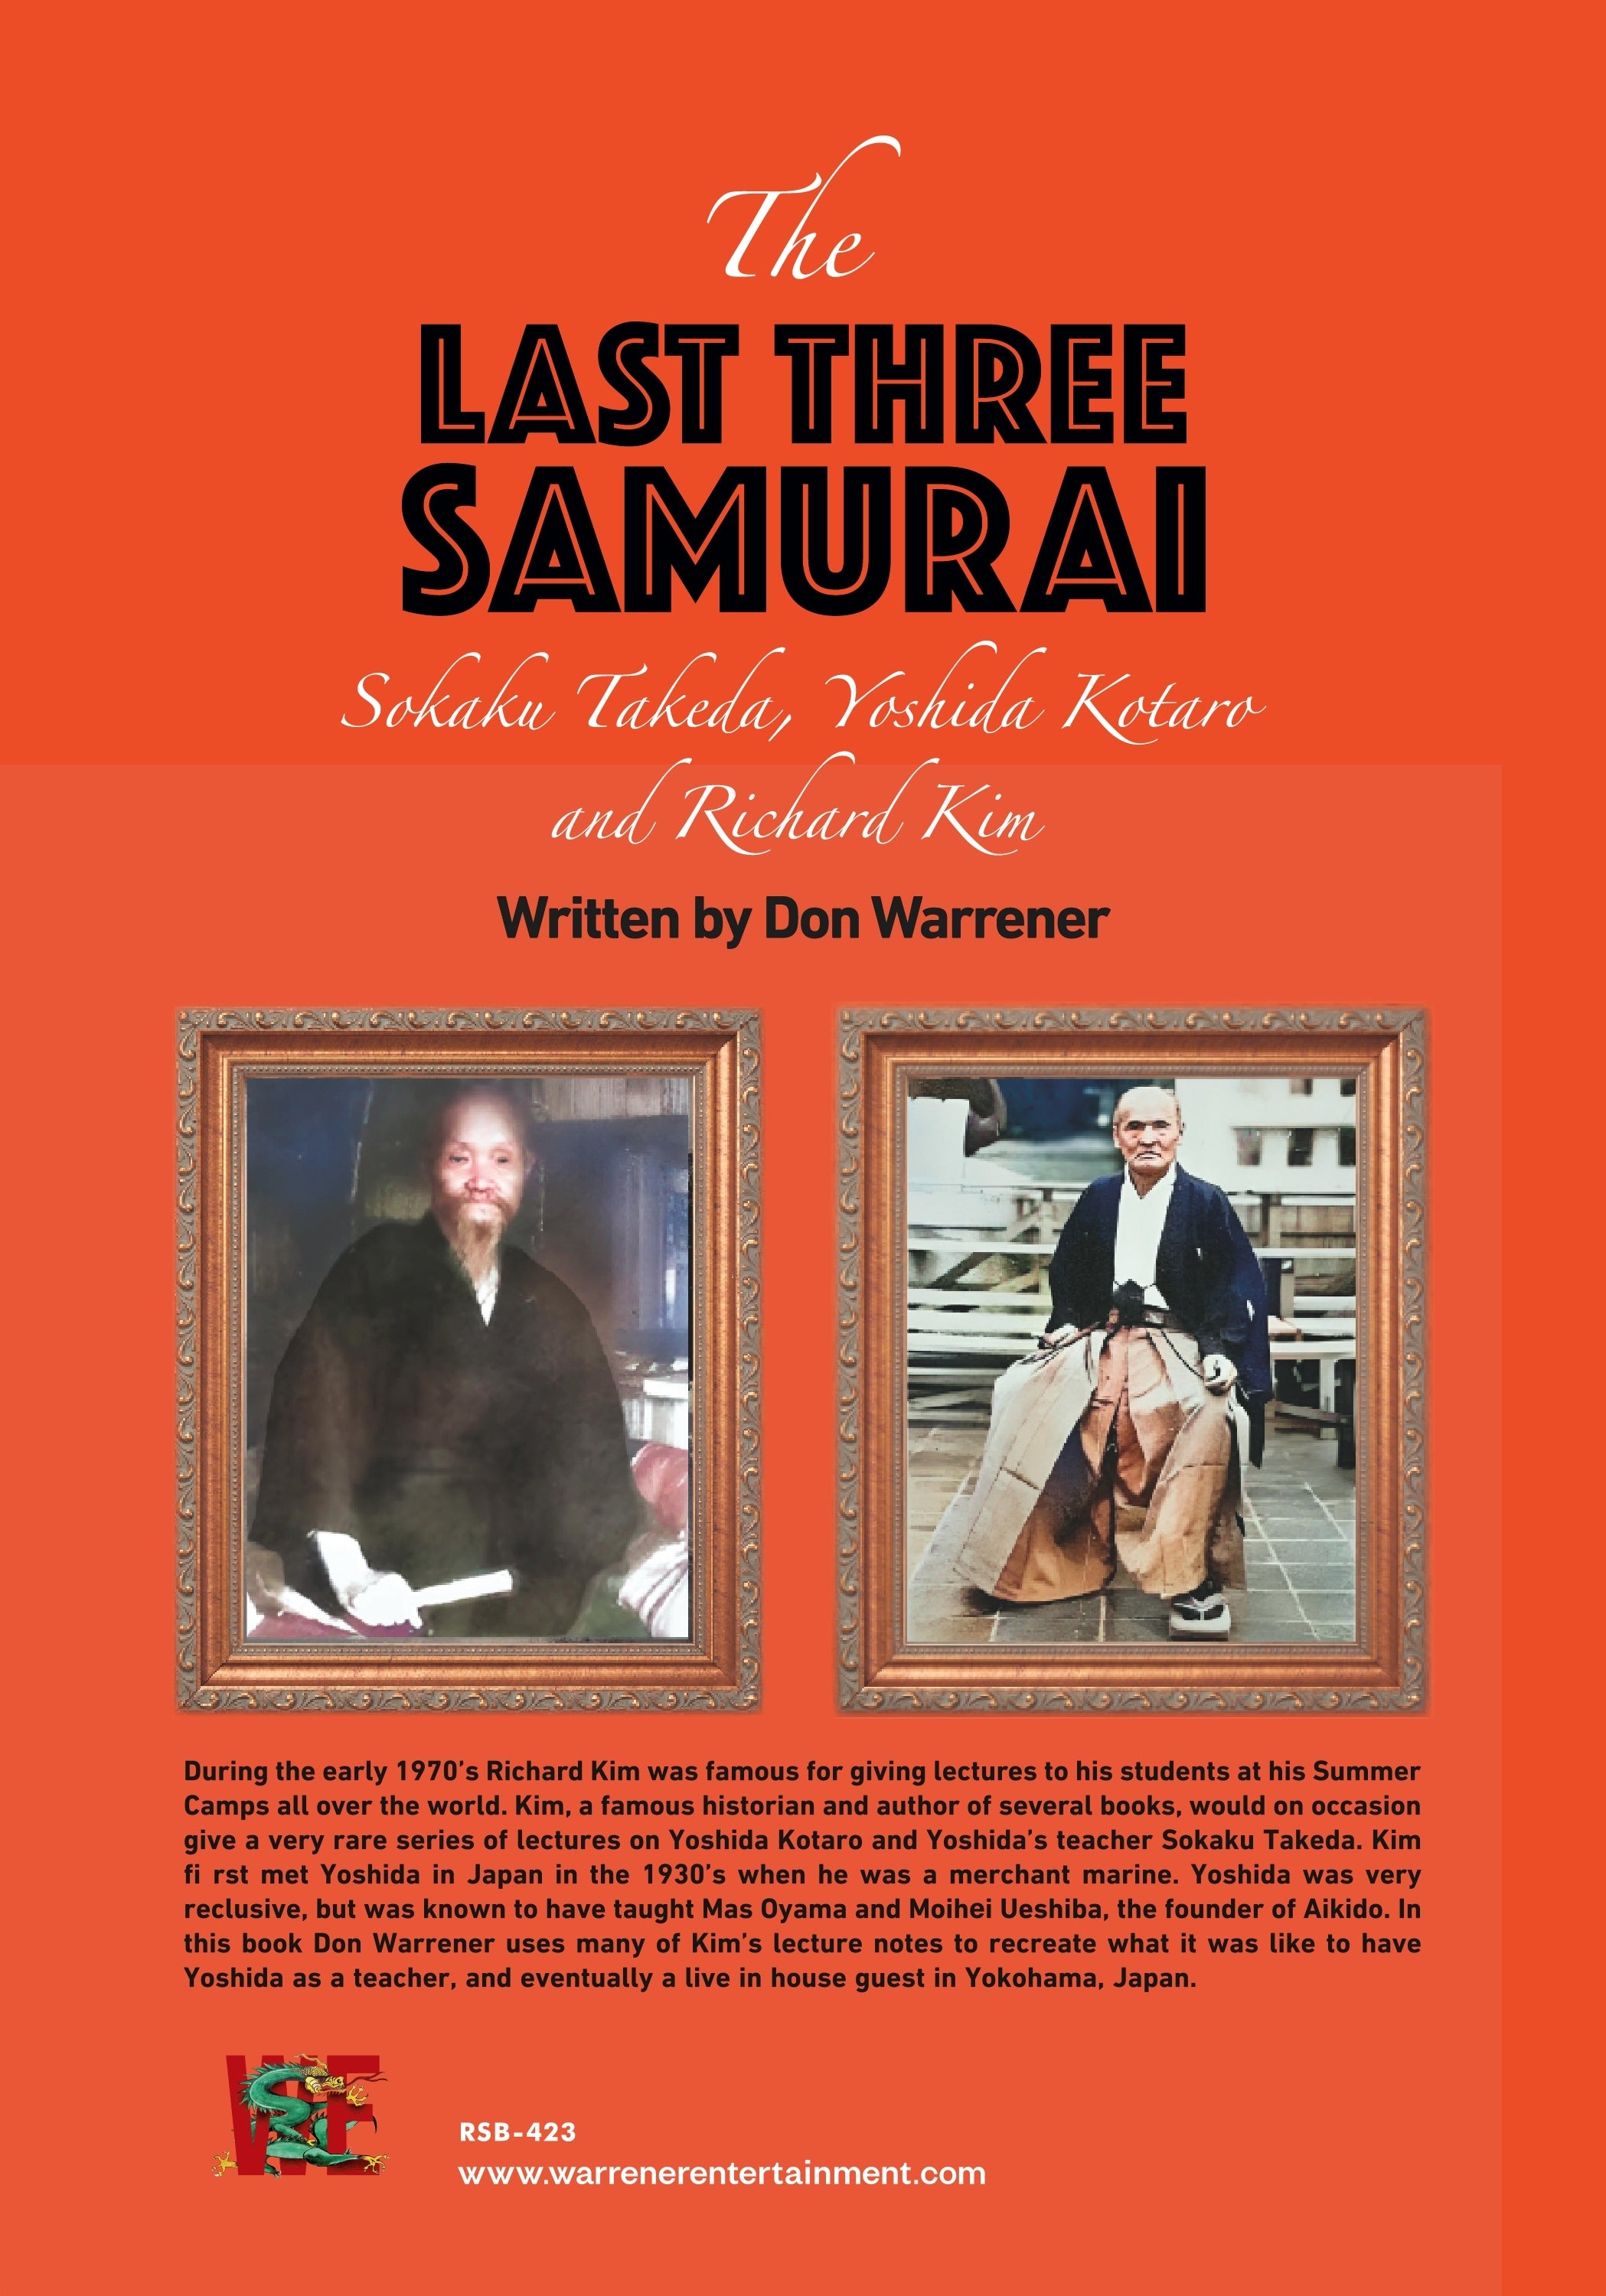 DIGITAL E-BOOK The Last Three Samurai book by Don Warrener